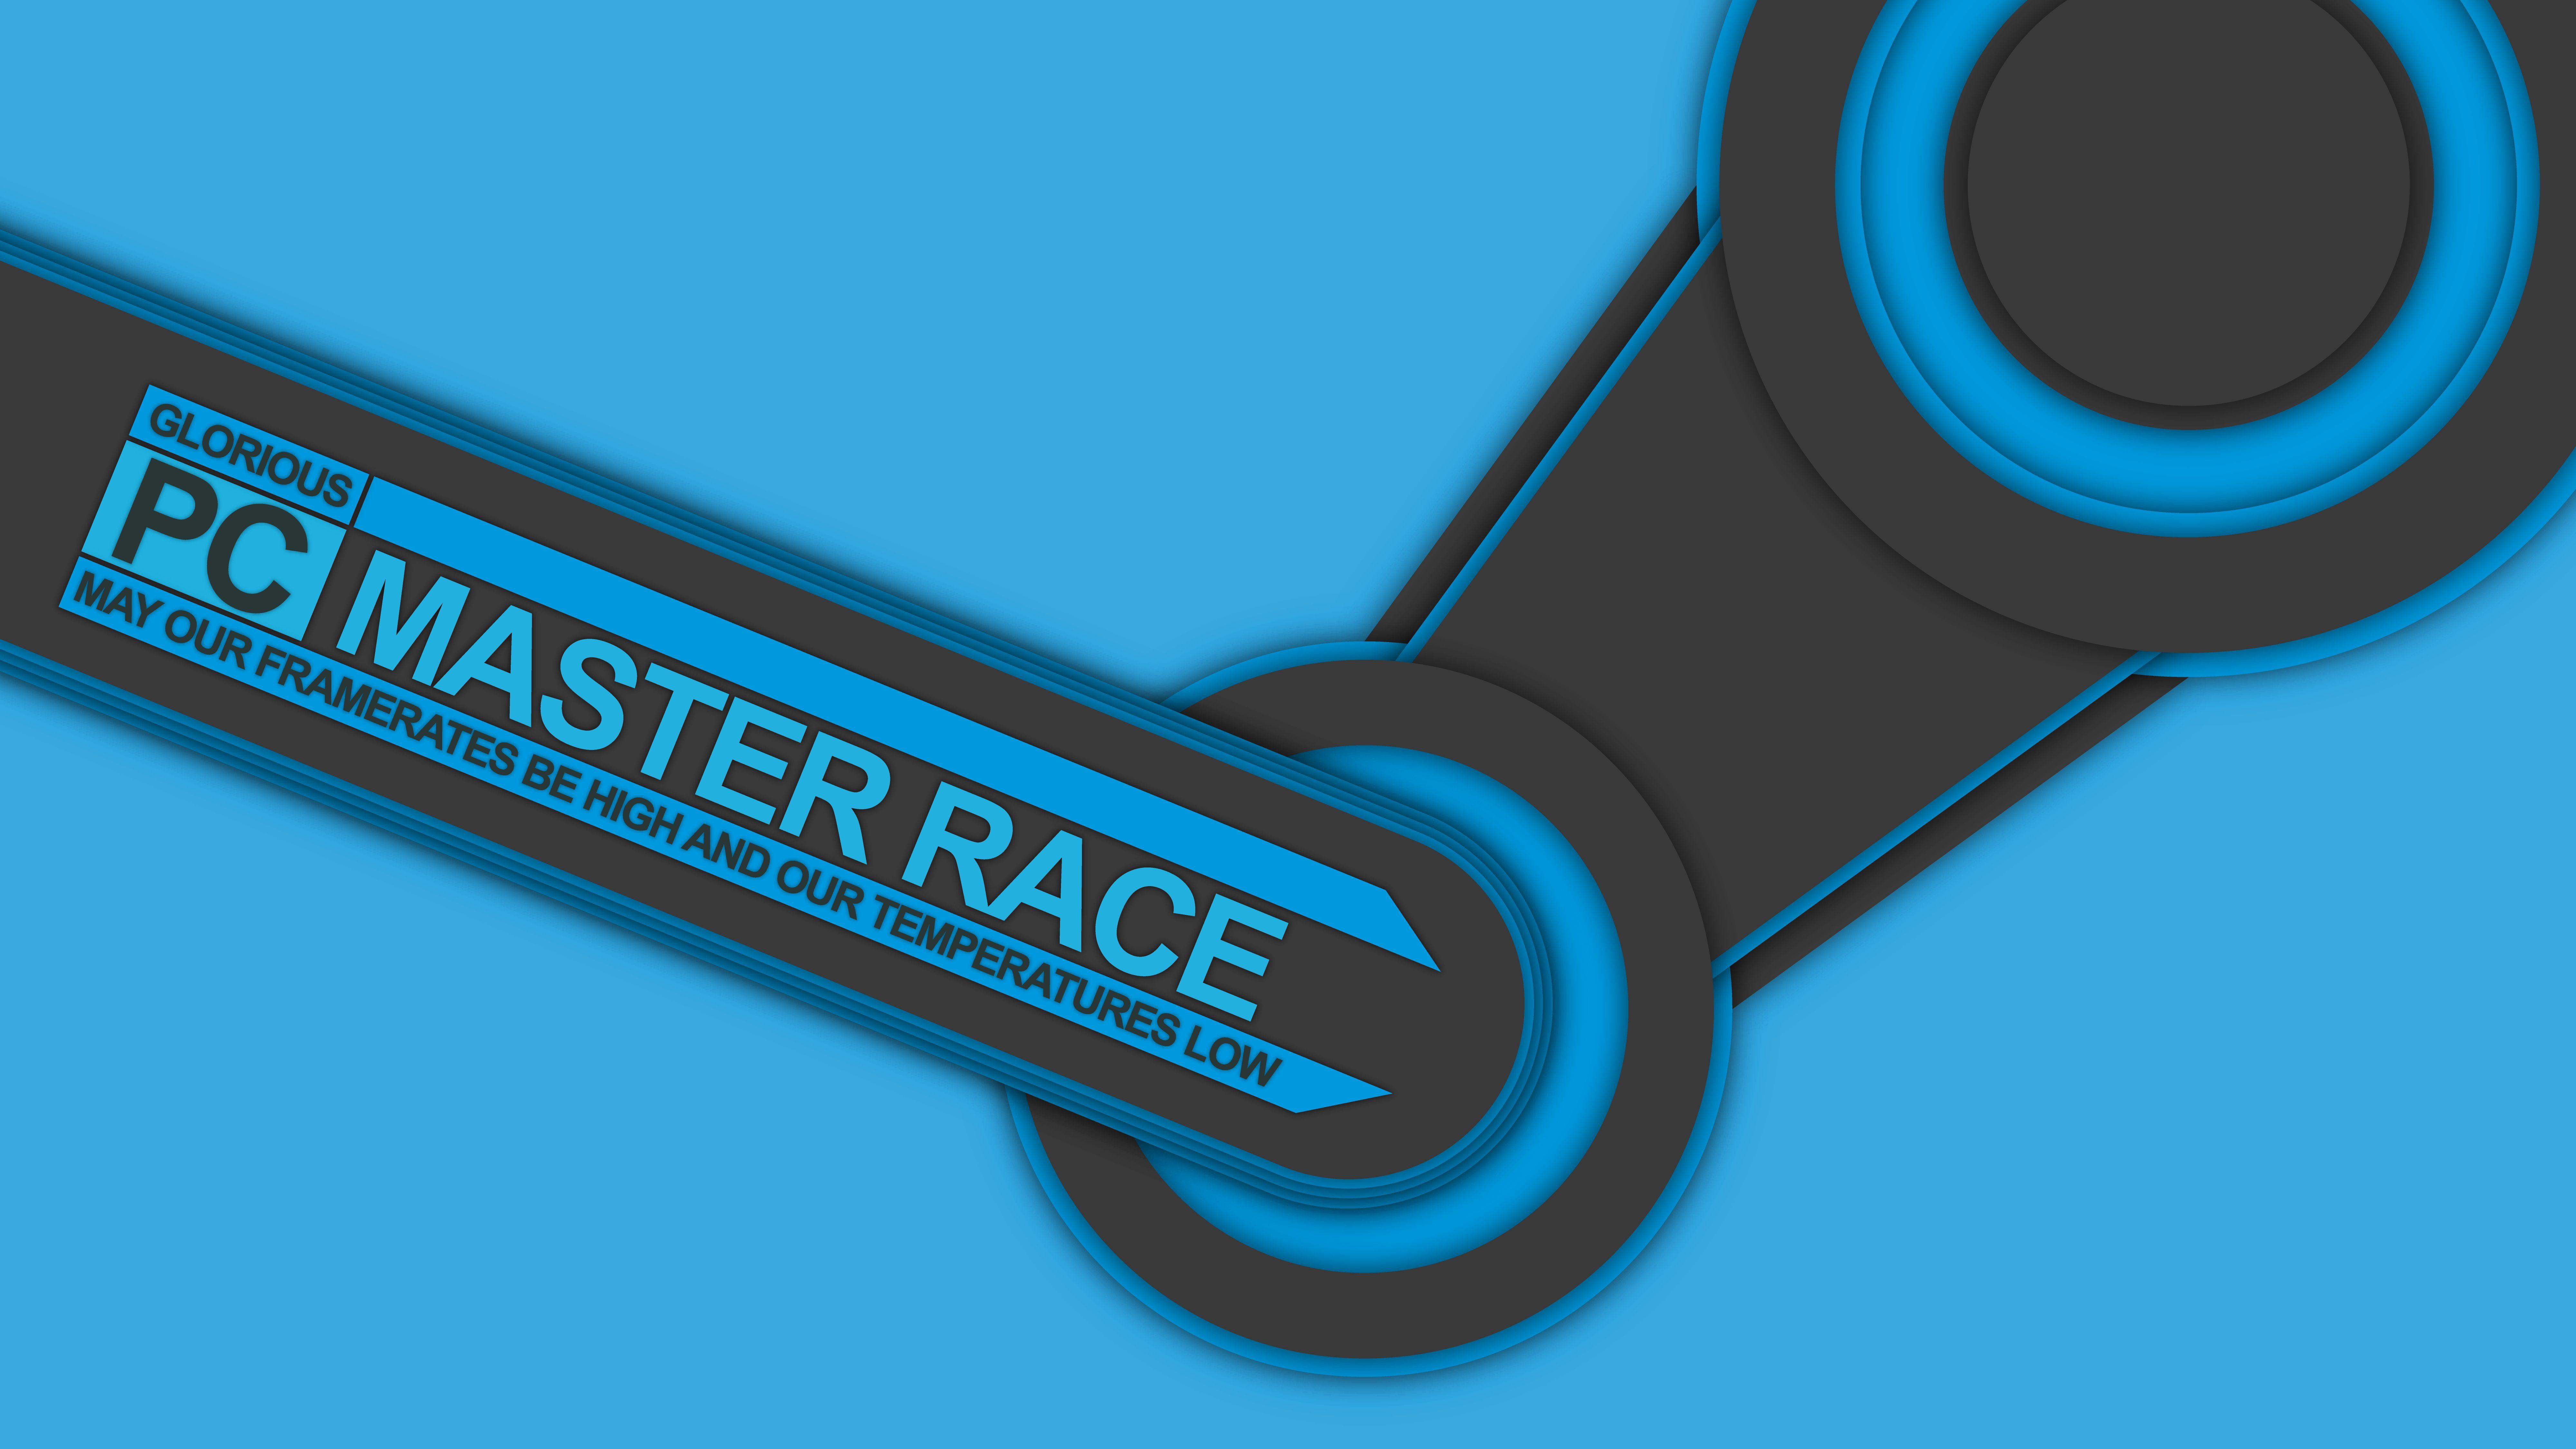 Пк мастер игра. PC Master Race. ПК мастер. PC Master Race Wallpaper. Glorious.